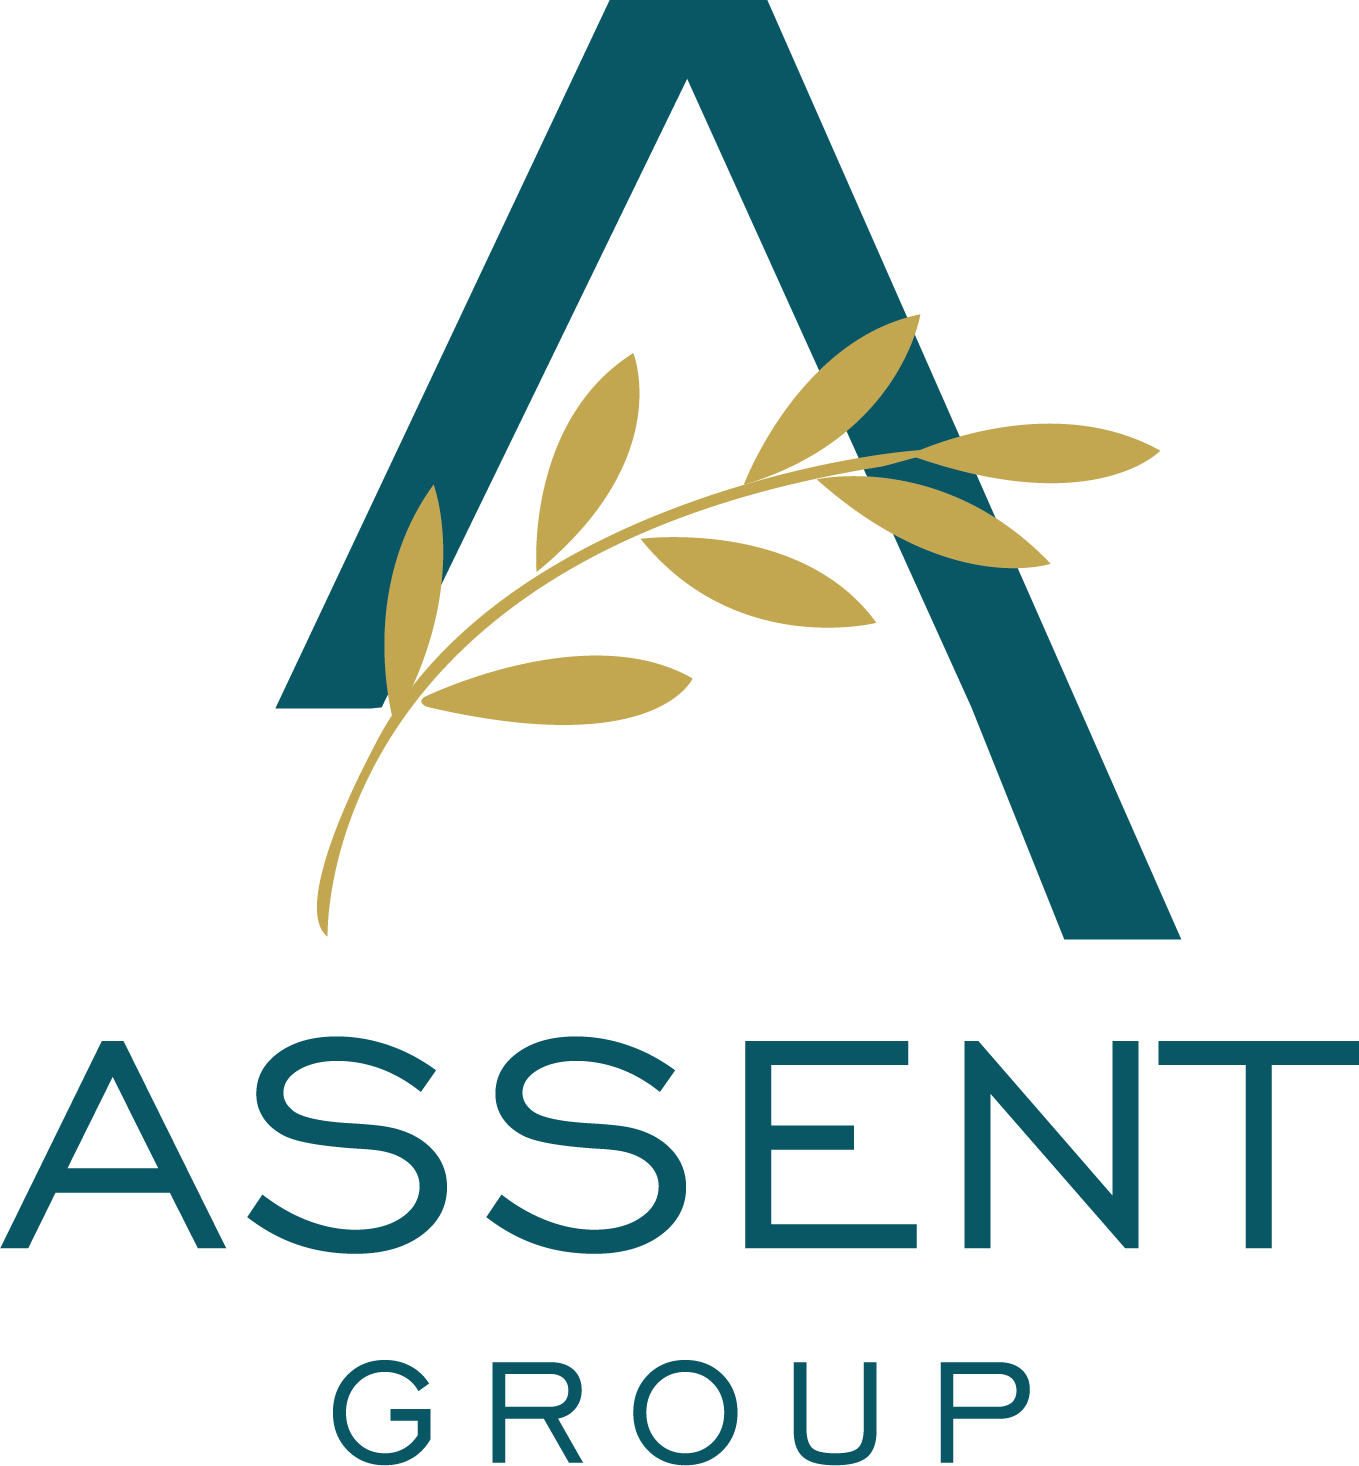 Assent Group